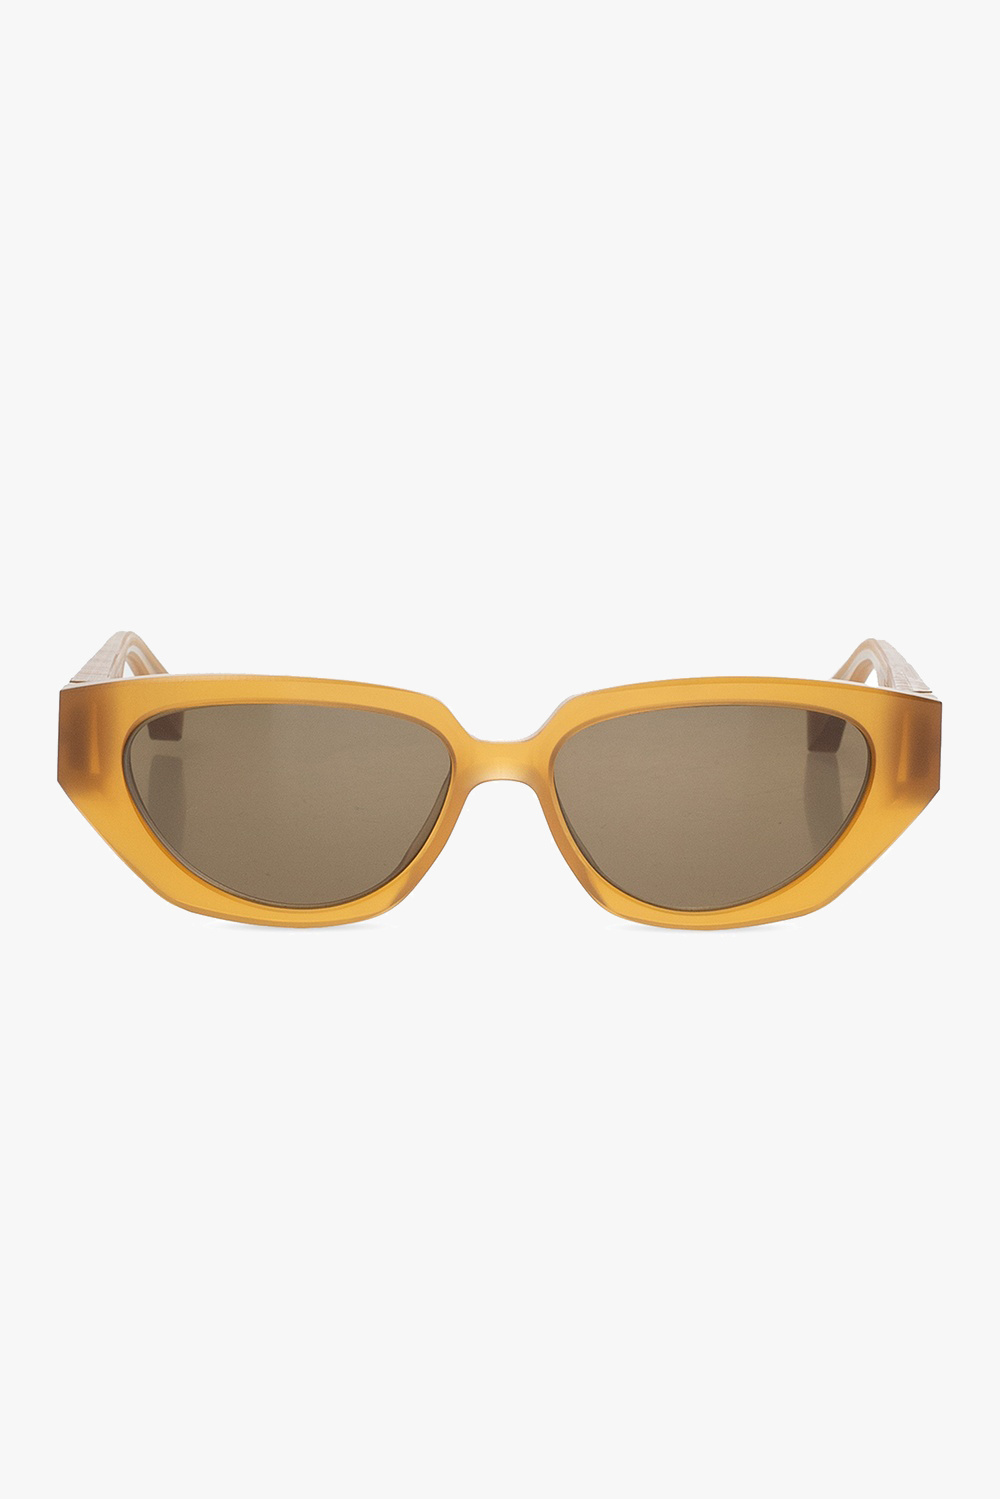 Mykita ‘MMRAW015’ sunglasses